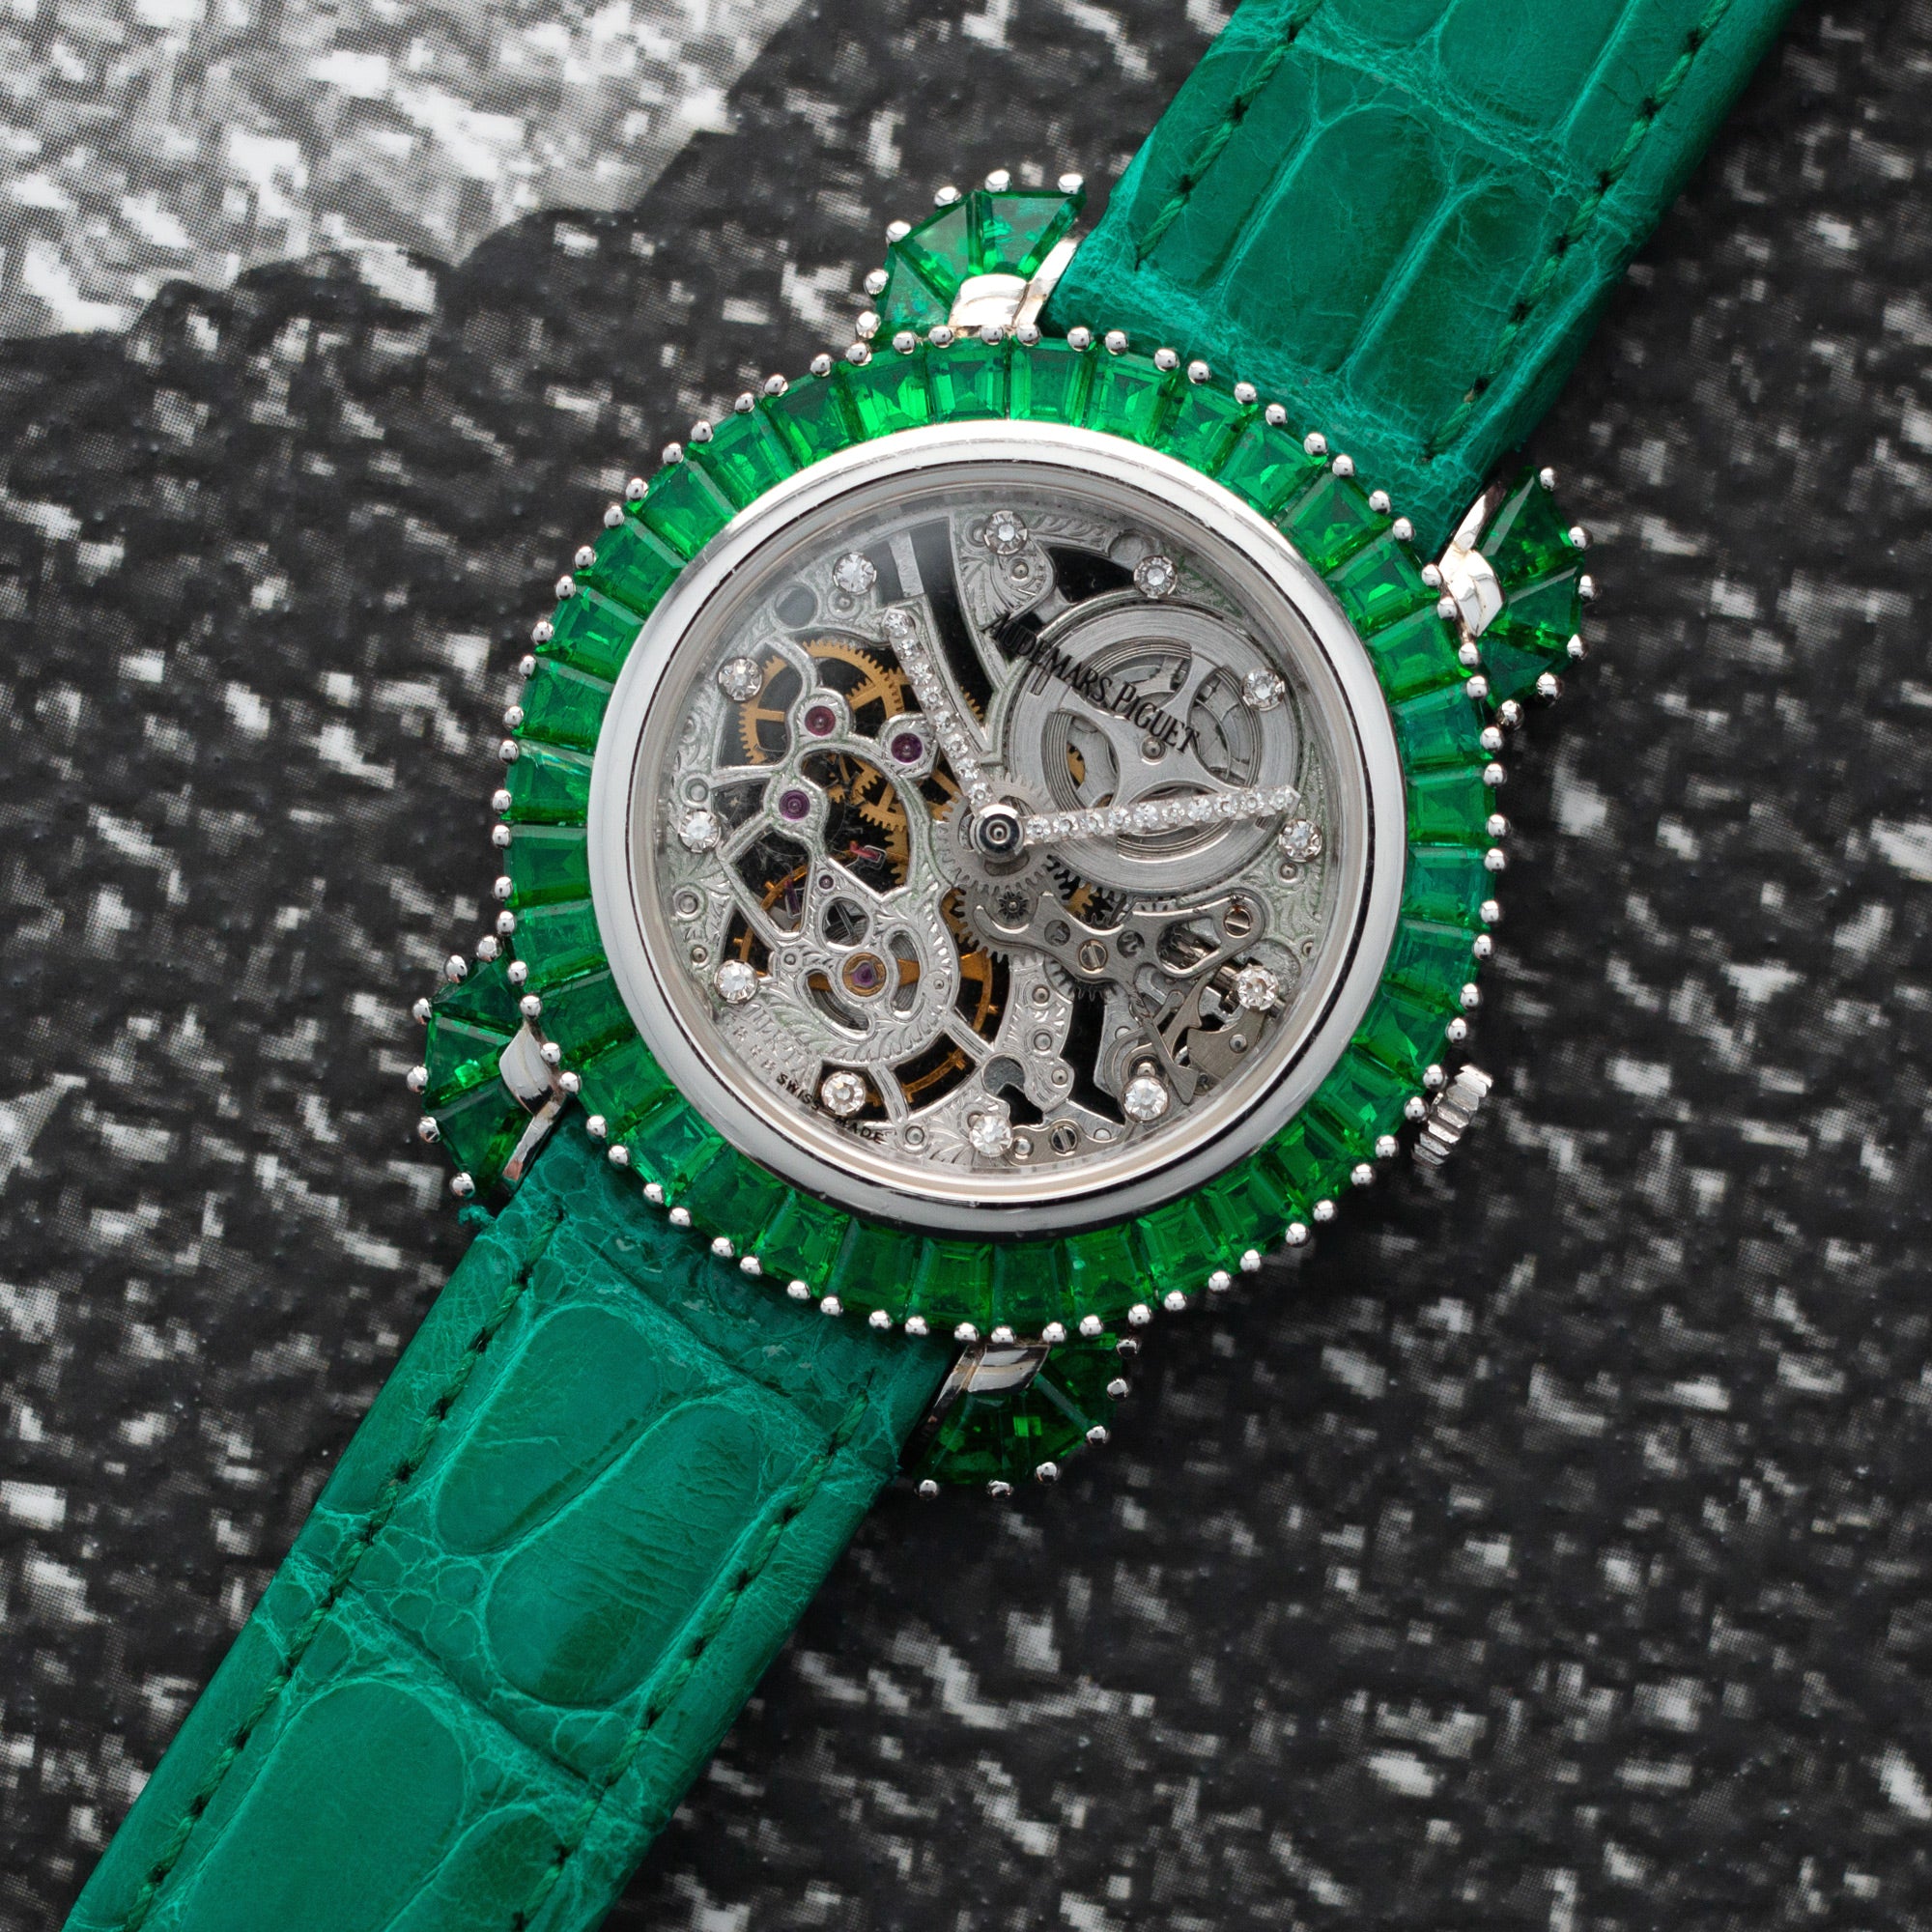 Audemars Piguet - Audemars Piguet Skeletonized Emerald Diamond Watch, Piece Unique - The Keystone Watches